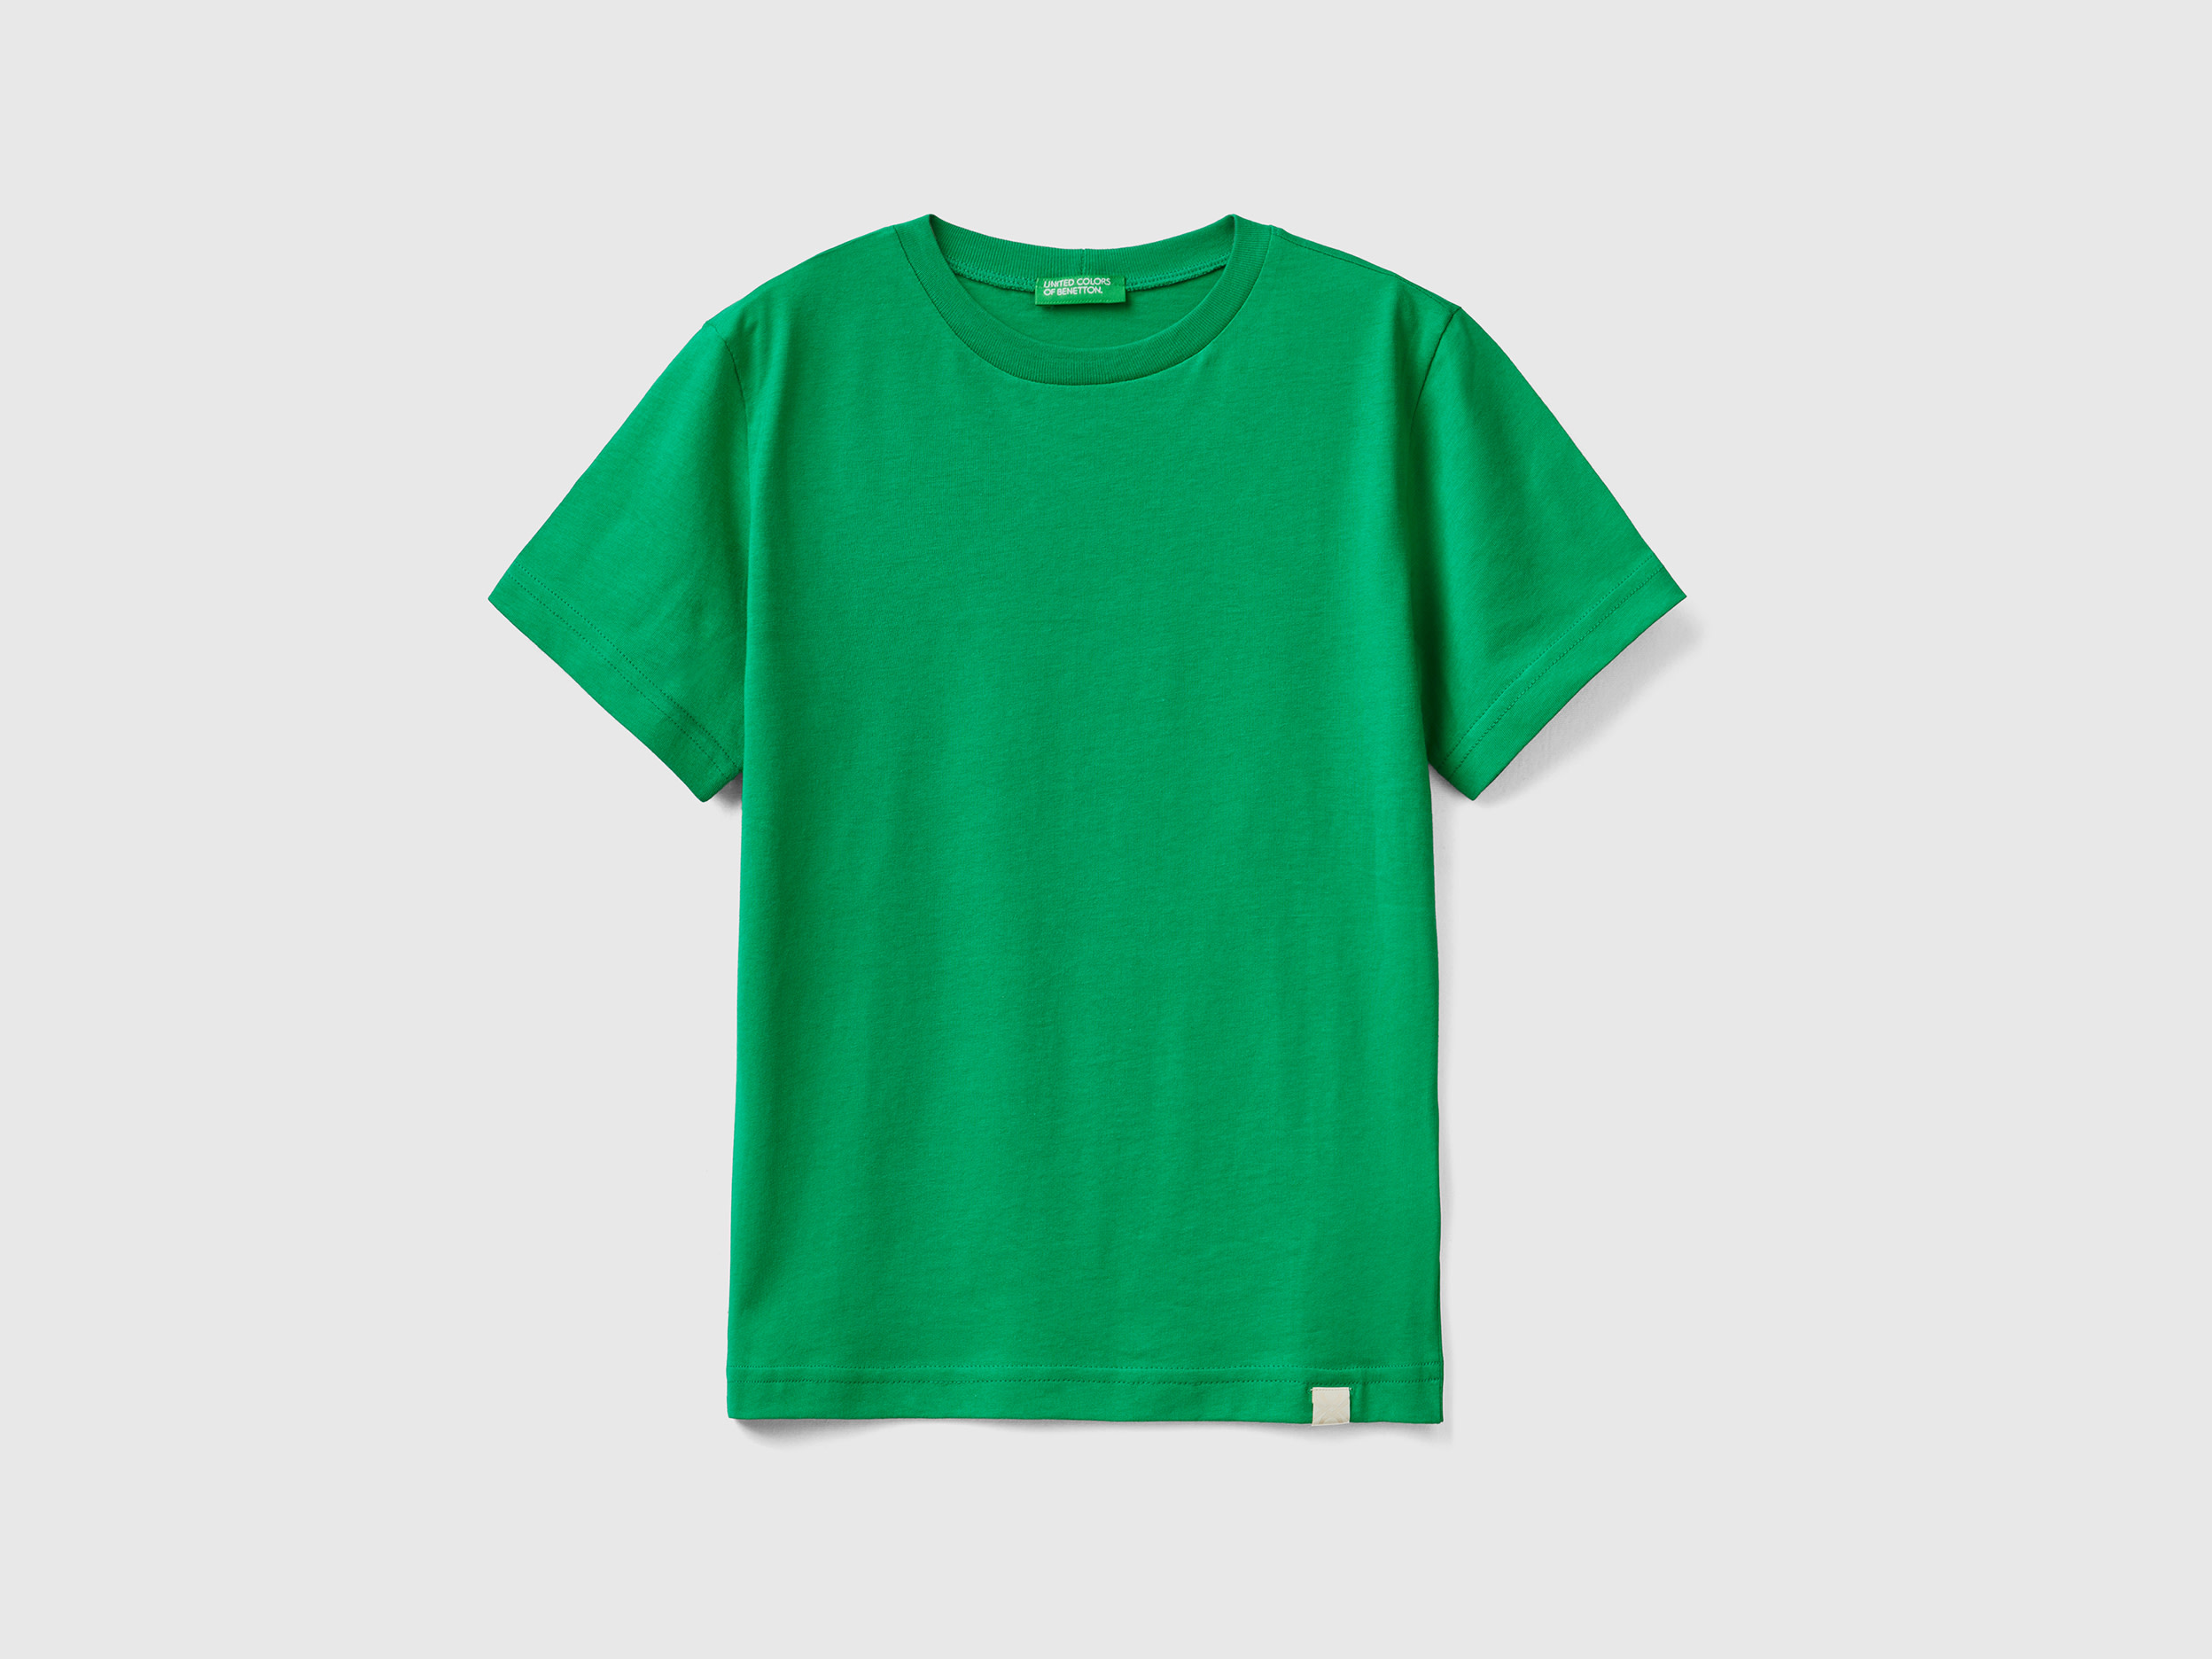 Benetton, Organic Cotton T-shirt, size L, Green, Kids